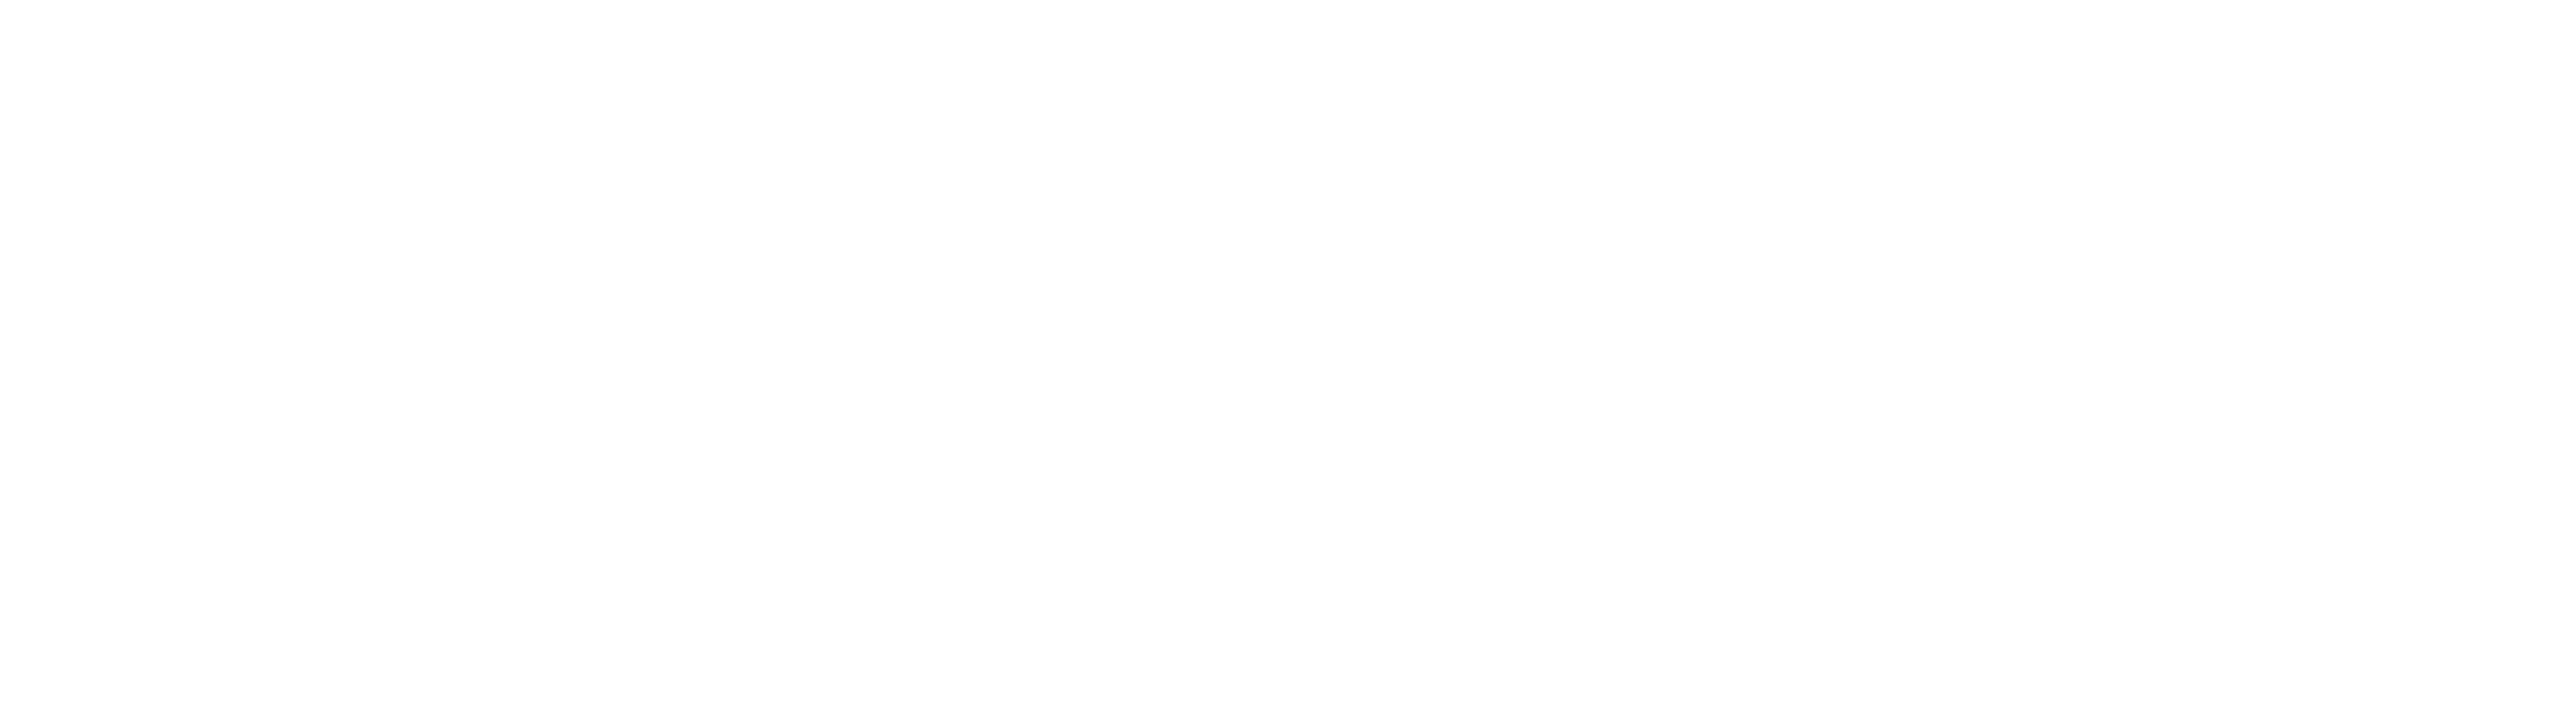 Downforce Technologies